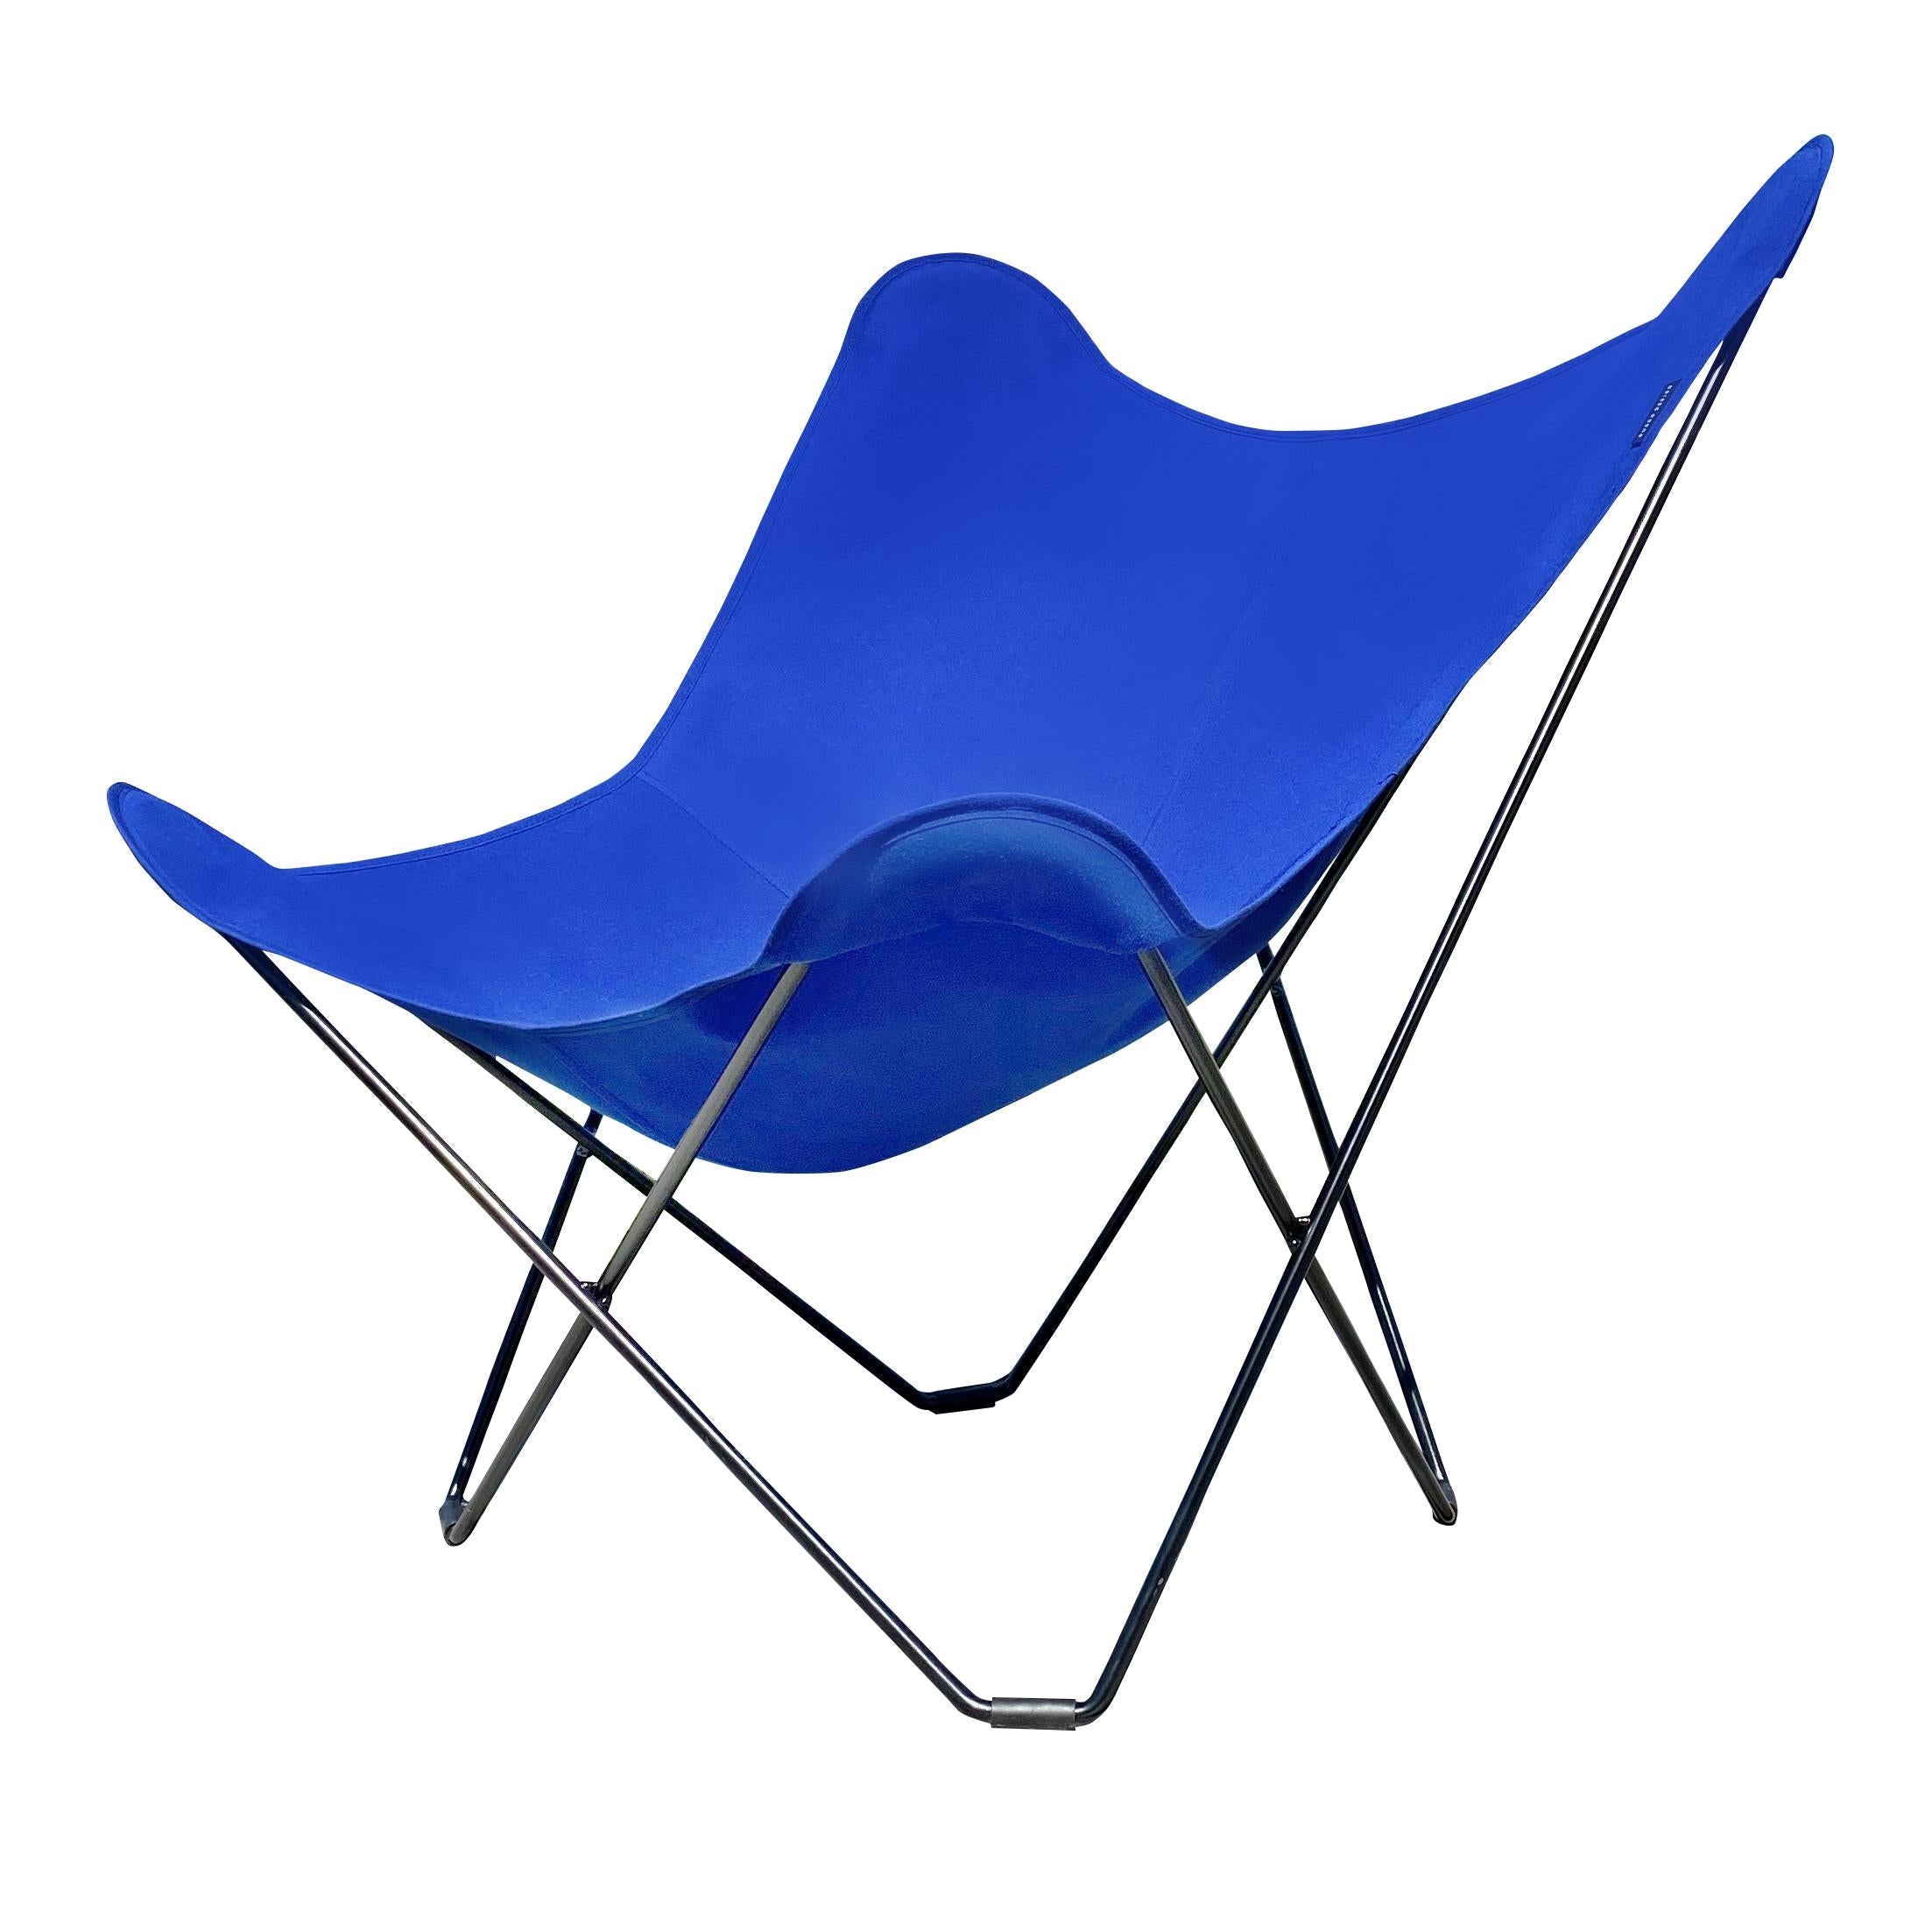 Cuero Sunshine Mariposa Butterfly Chair, Atlantic Blue/Black Outdoor Frame